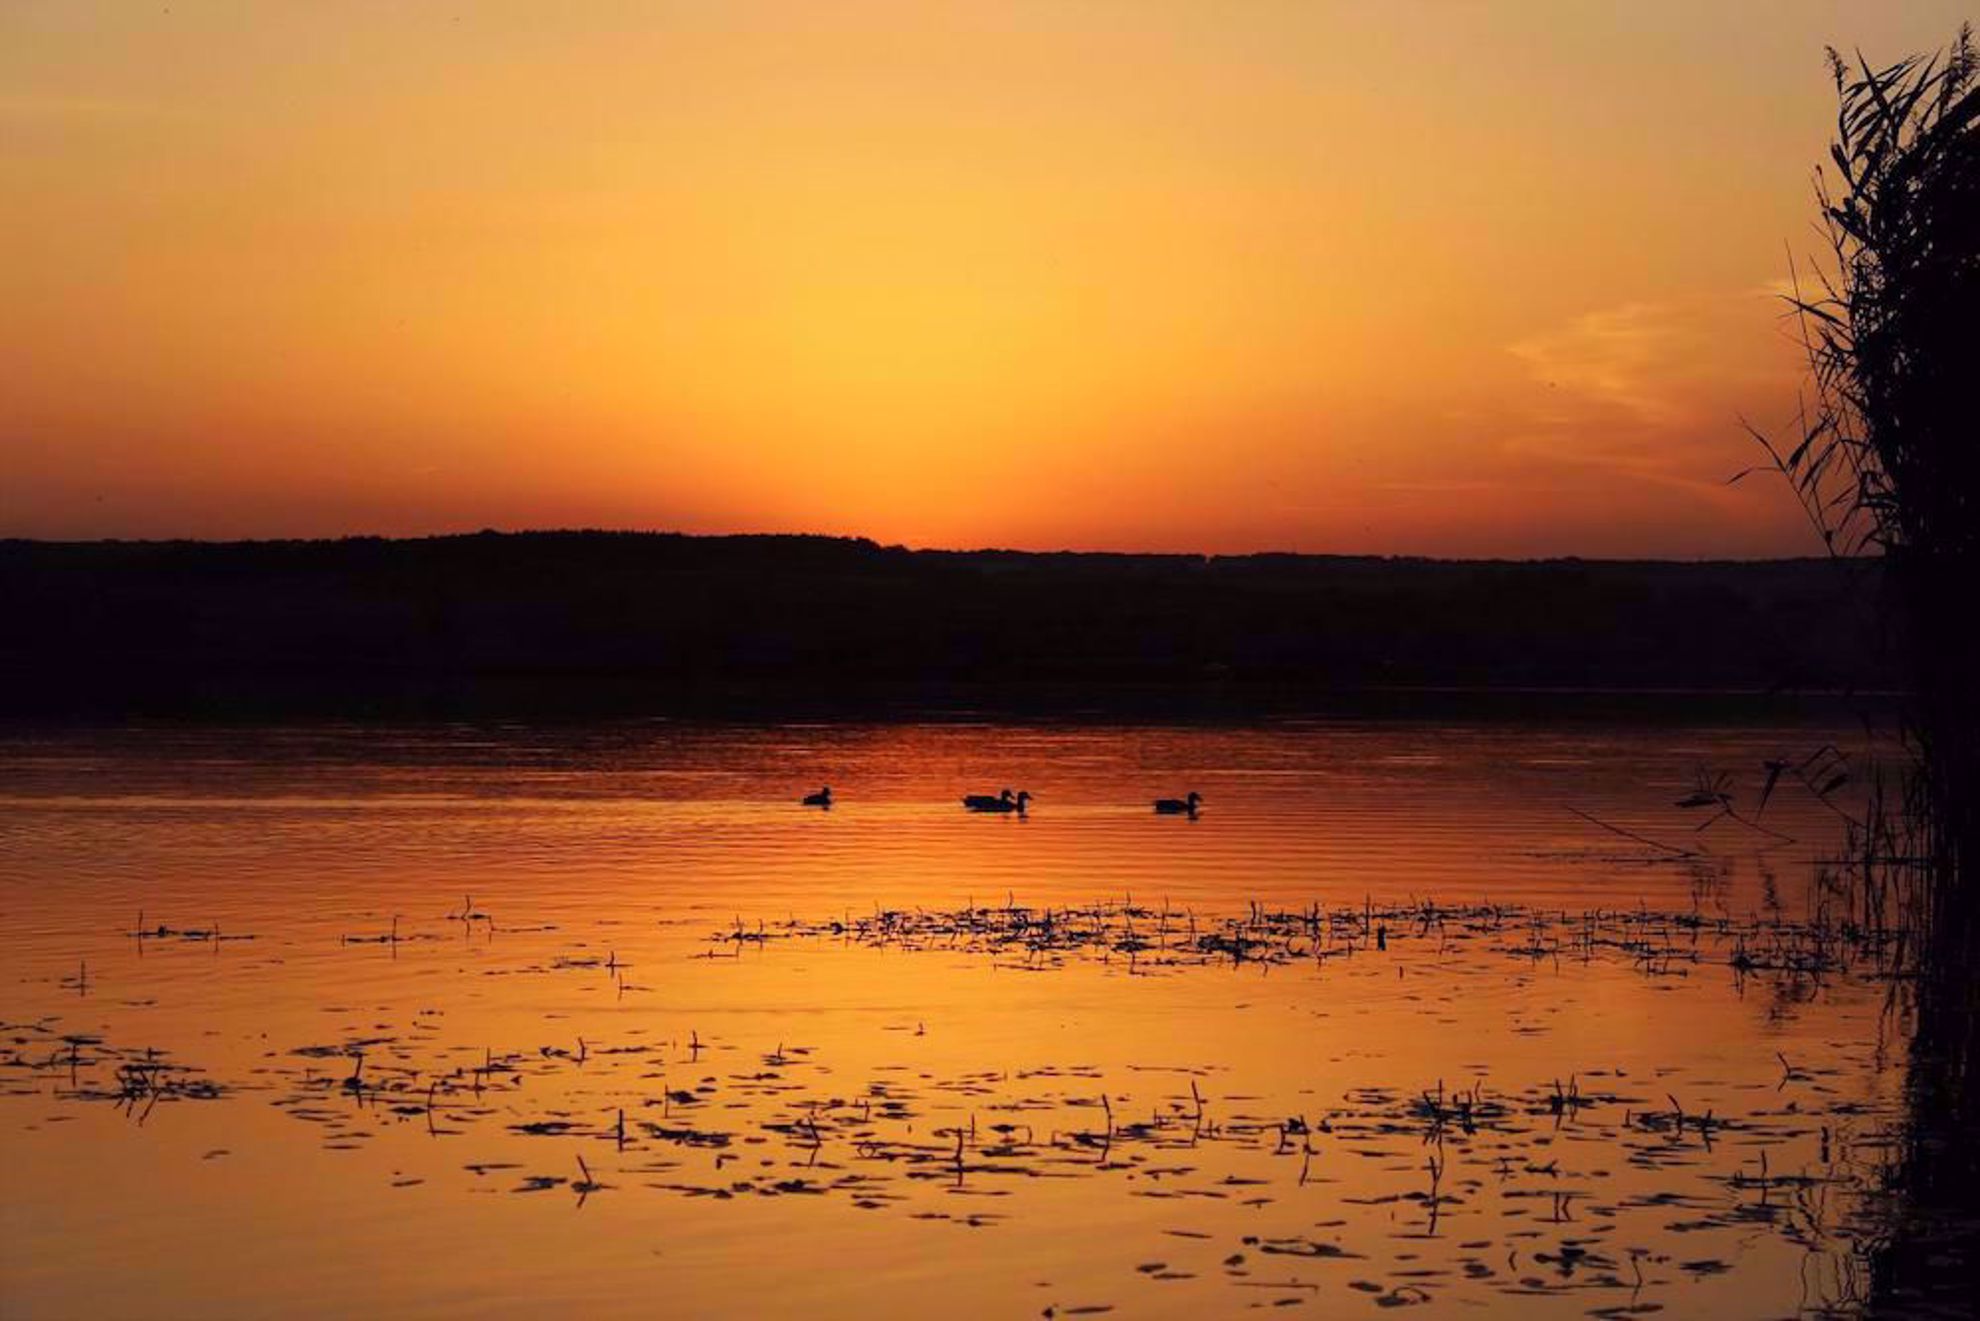 Ducks on the lake at sunset